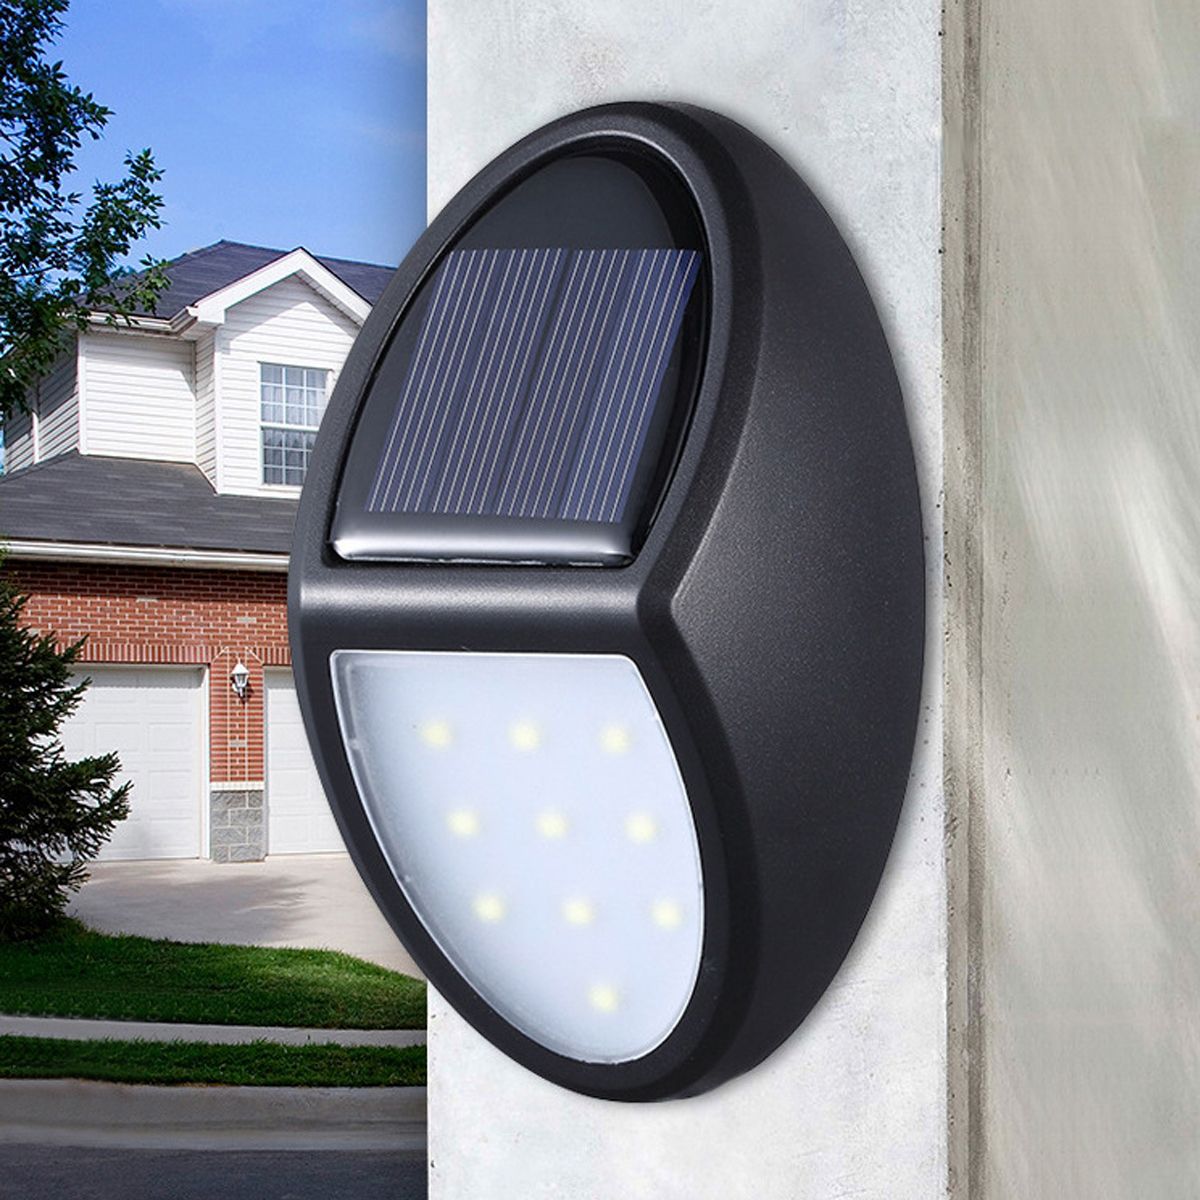 10LED-Solar-Power-Wall-Light-Waterproof-Outdoor-Garden-Yard-Lamp-Pathway-1691611